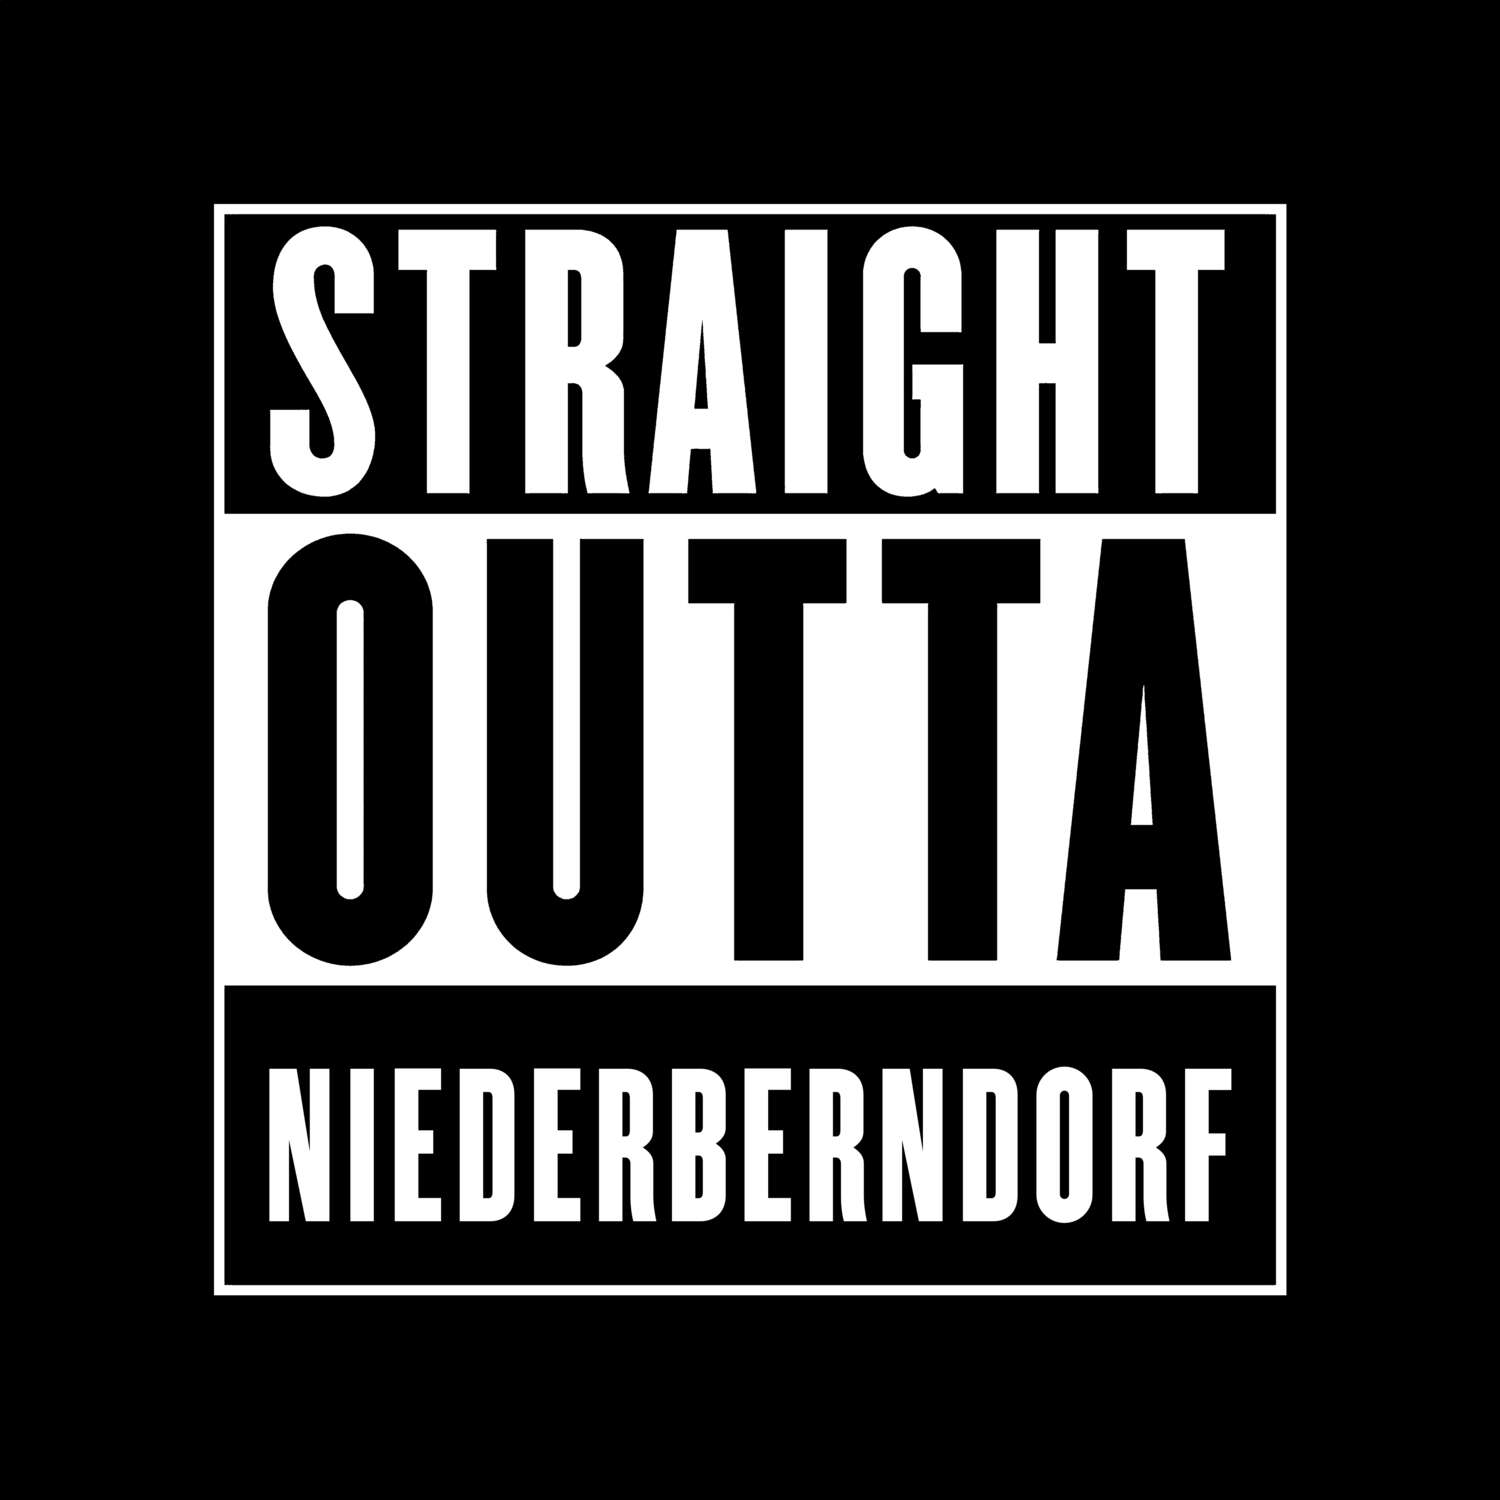 Niederberndorf T-Shirt »Straight Outta«